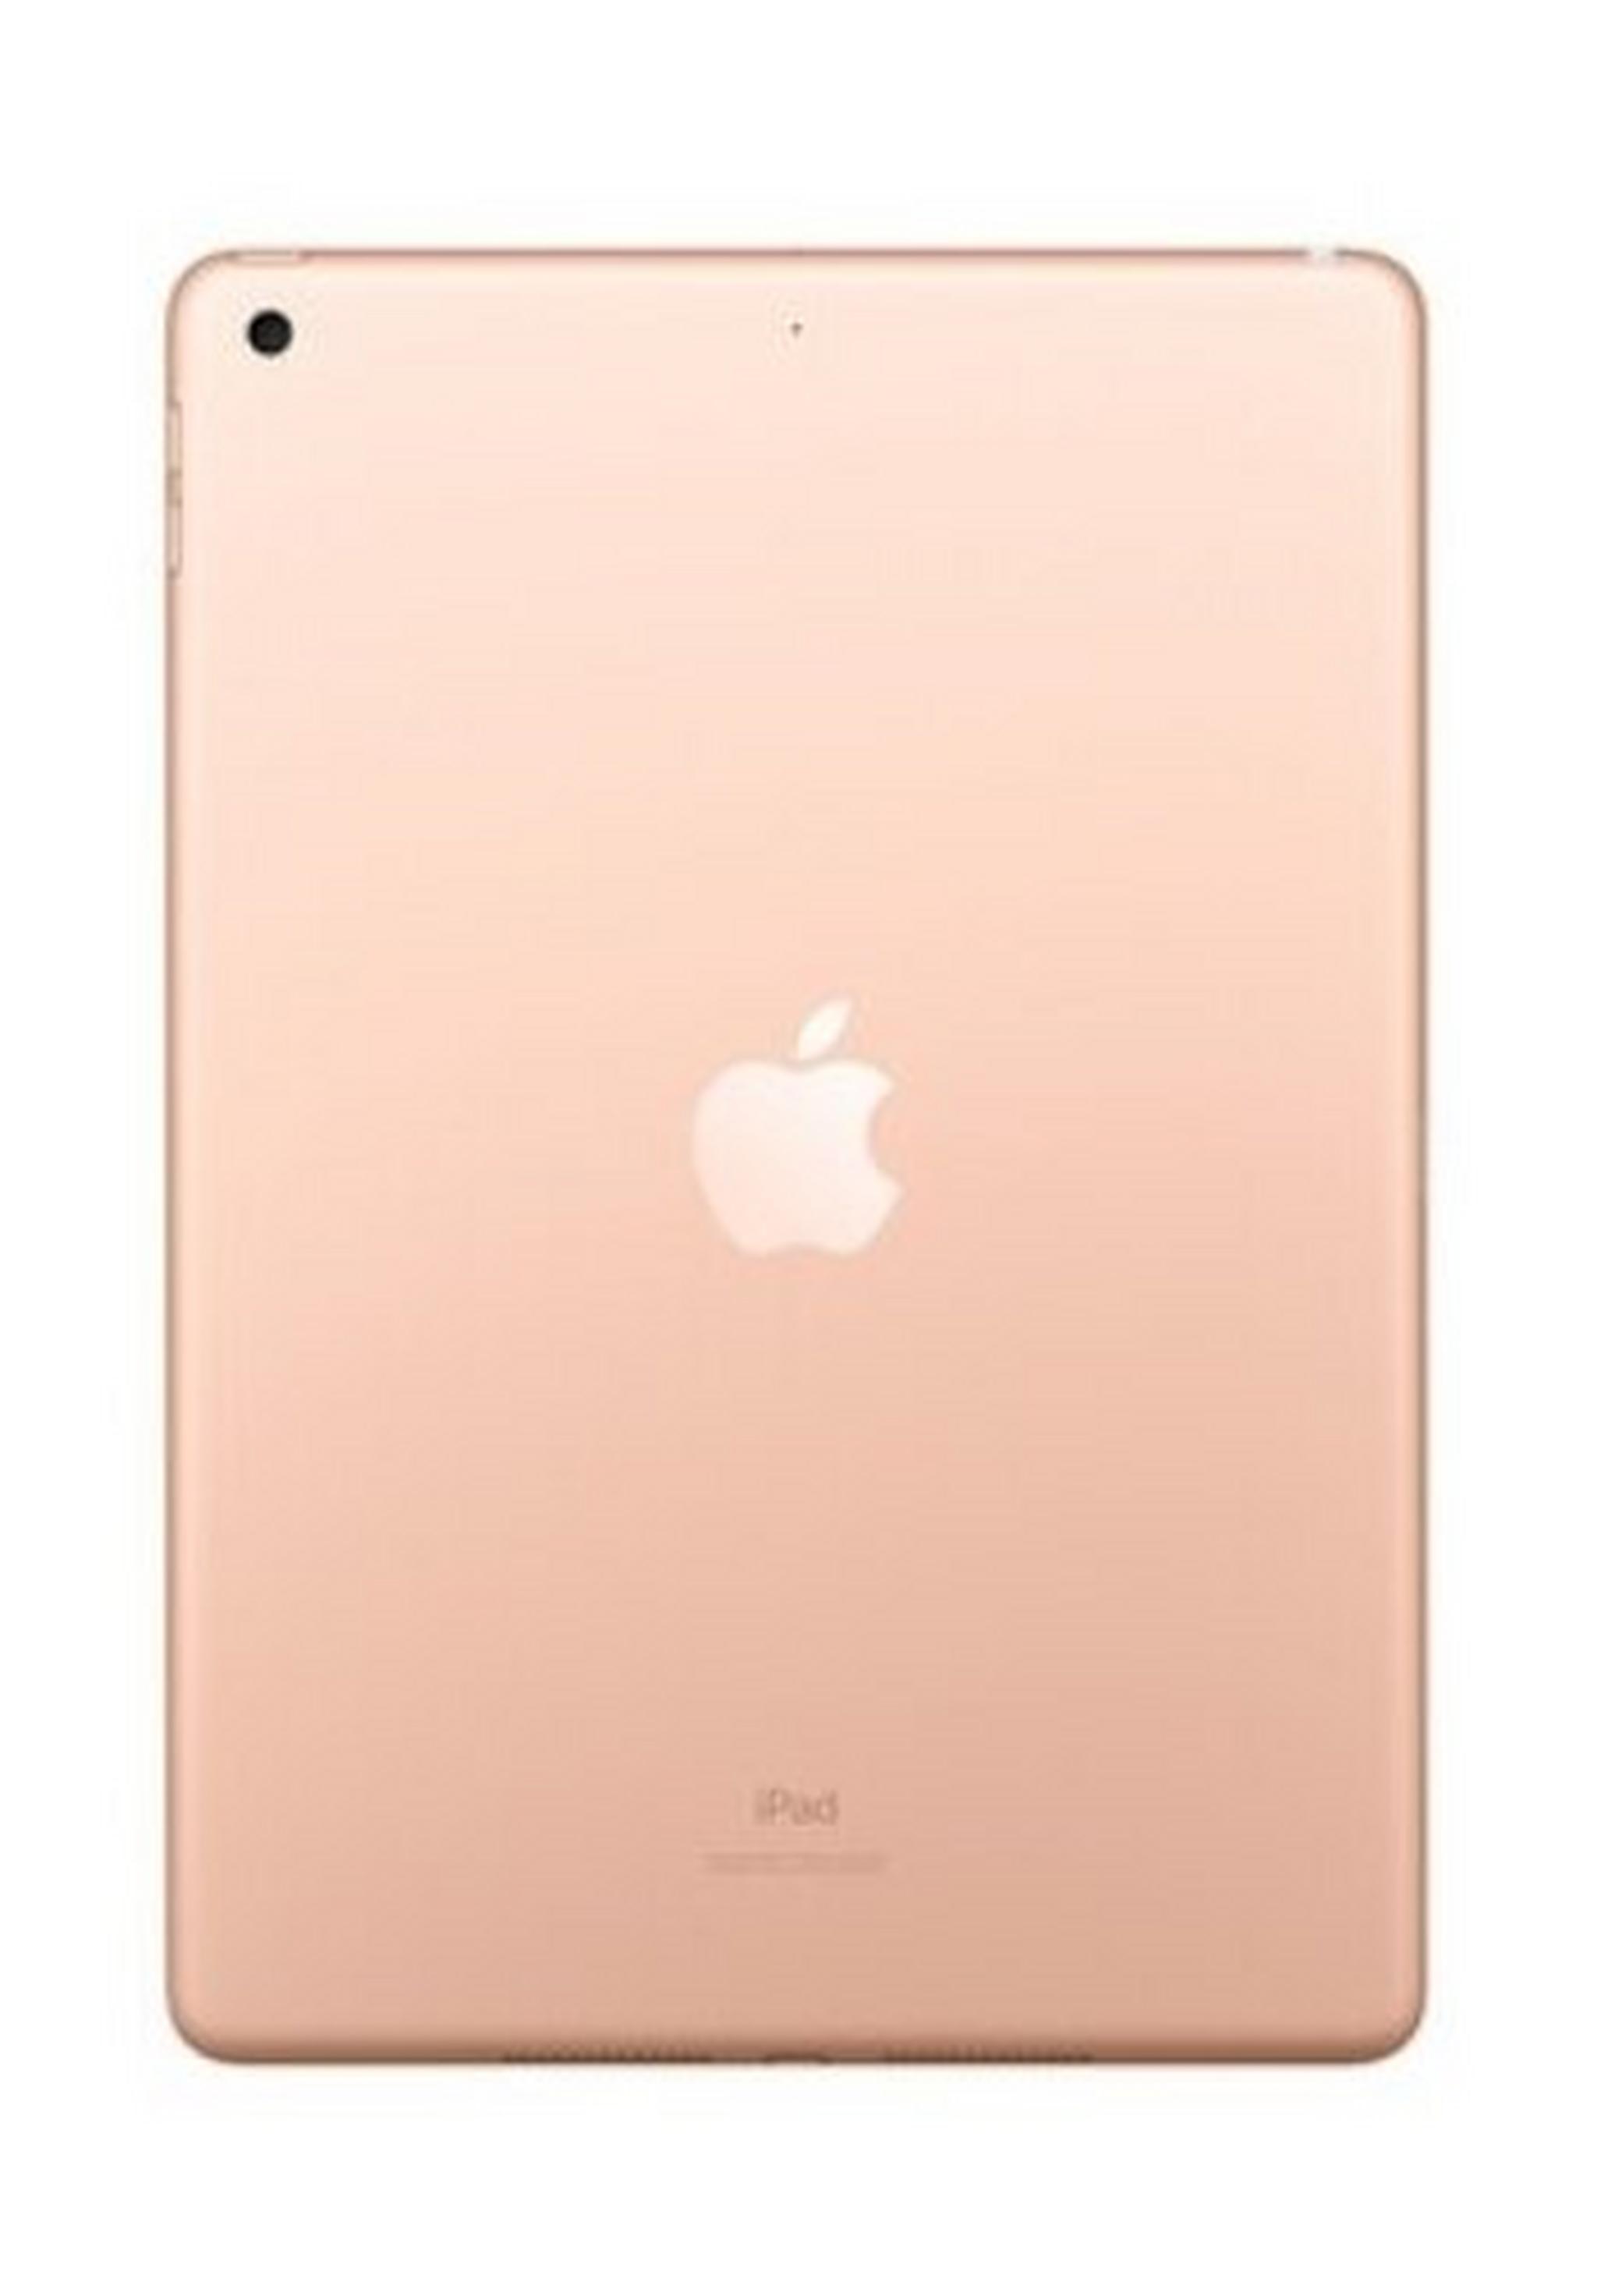 Apple iPad 8 128GB 10.2-inch Wifi Tablet - Gold